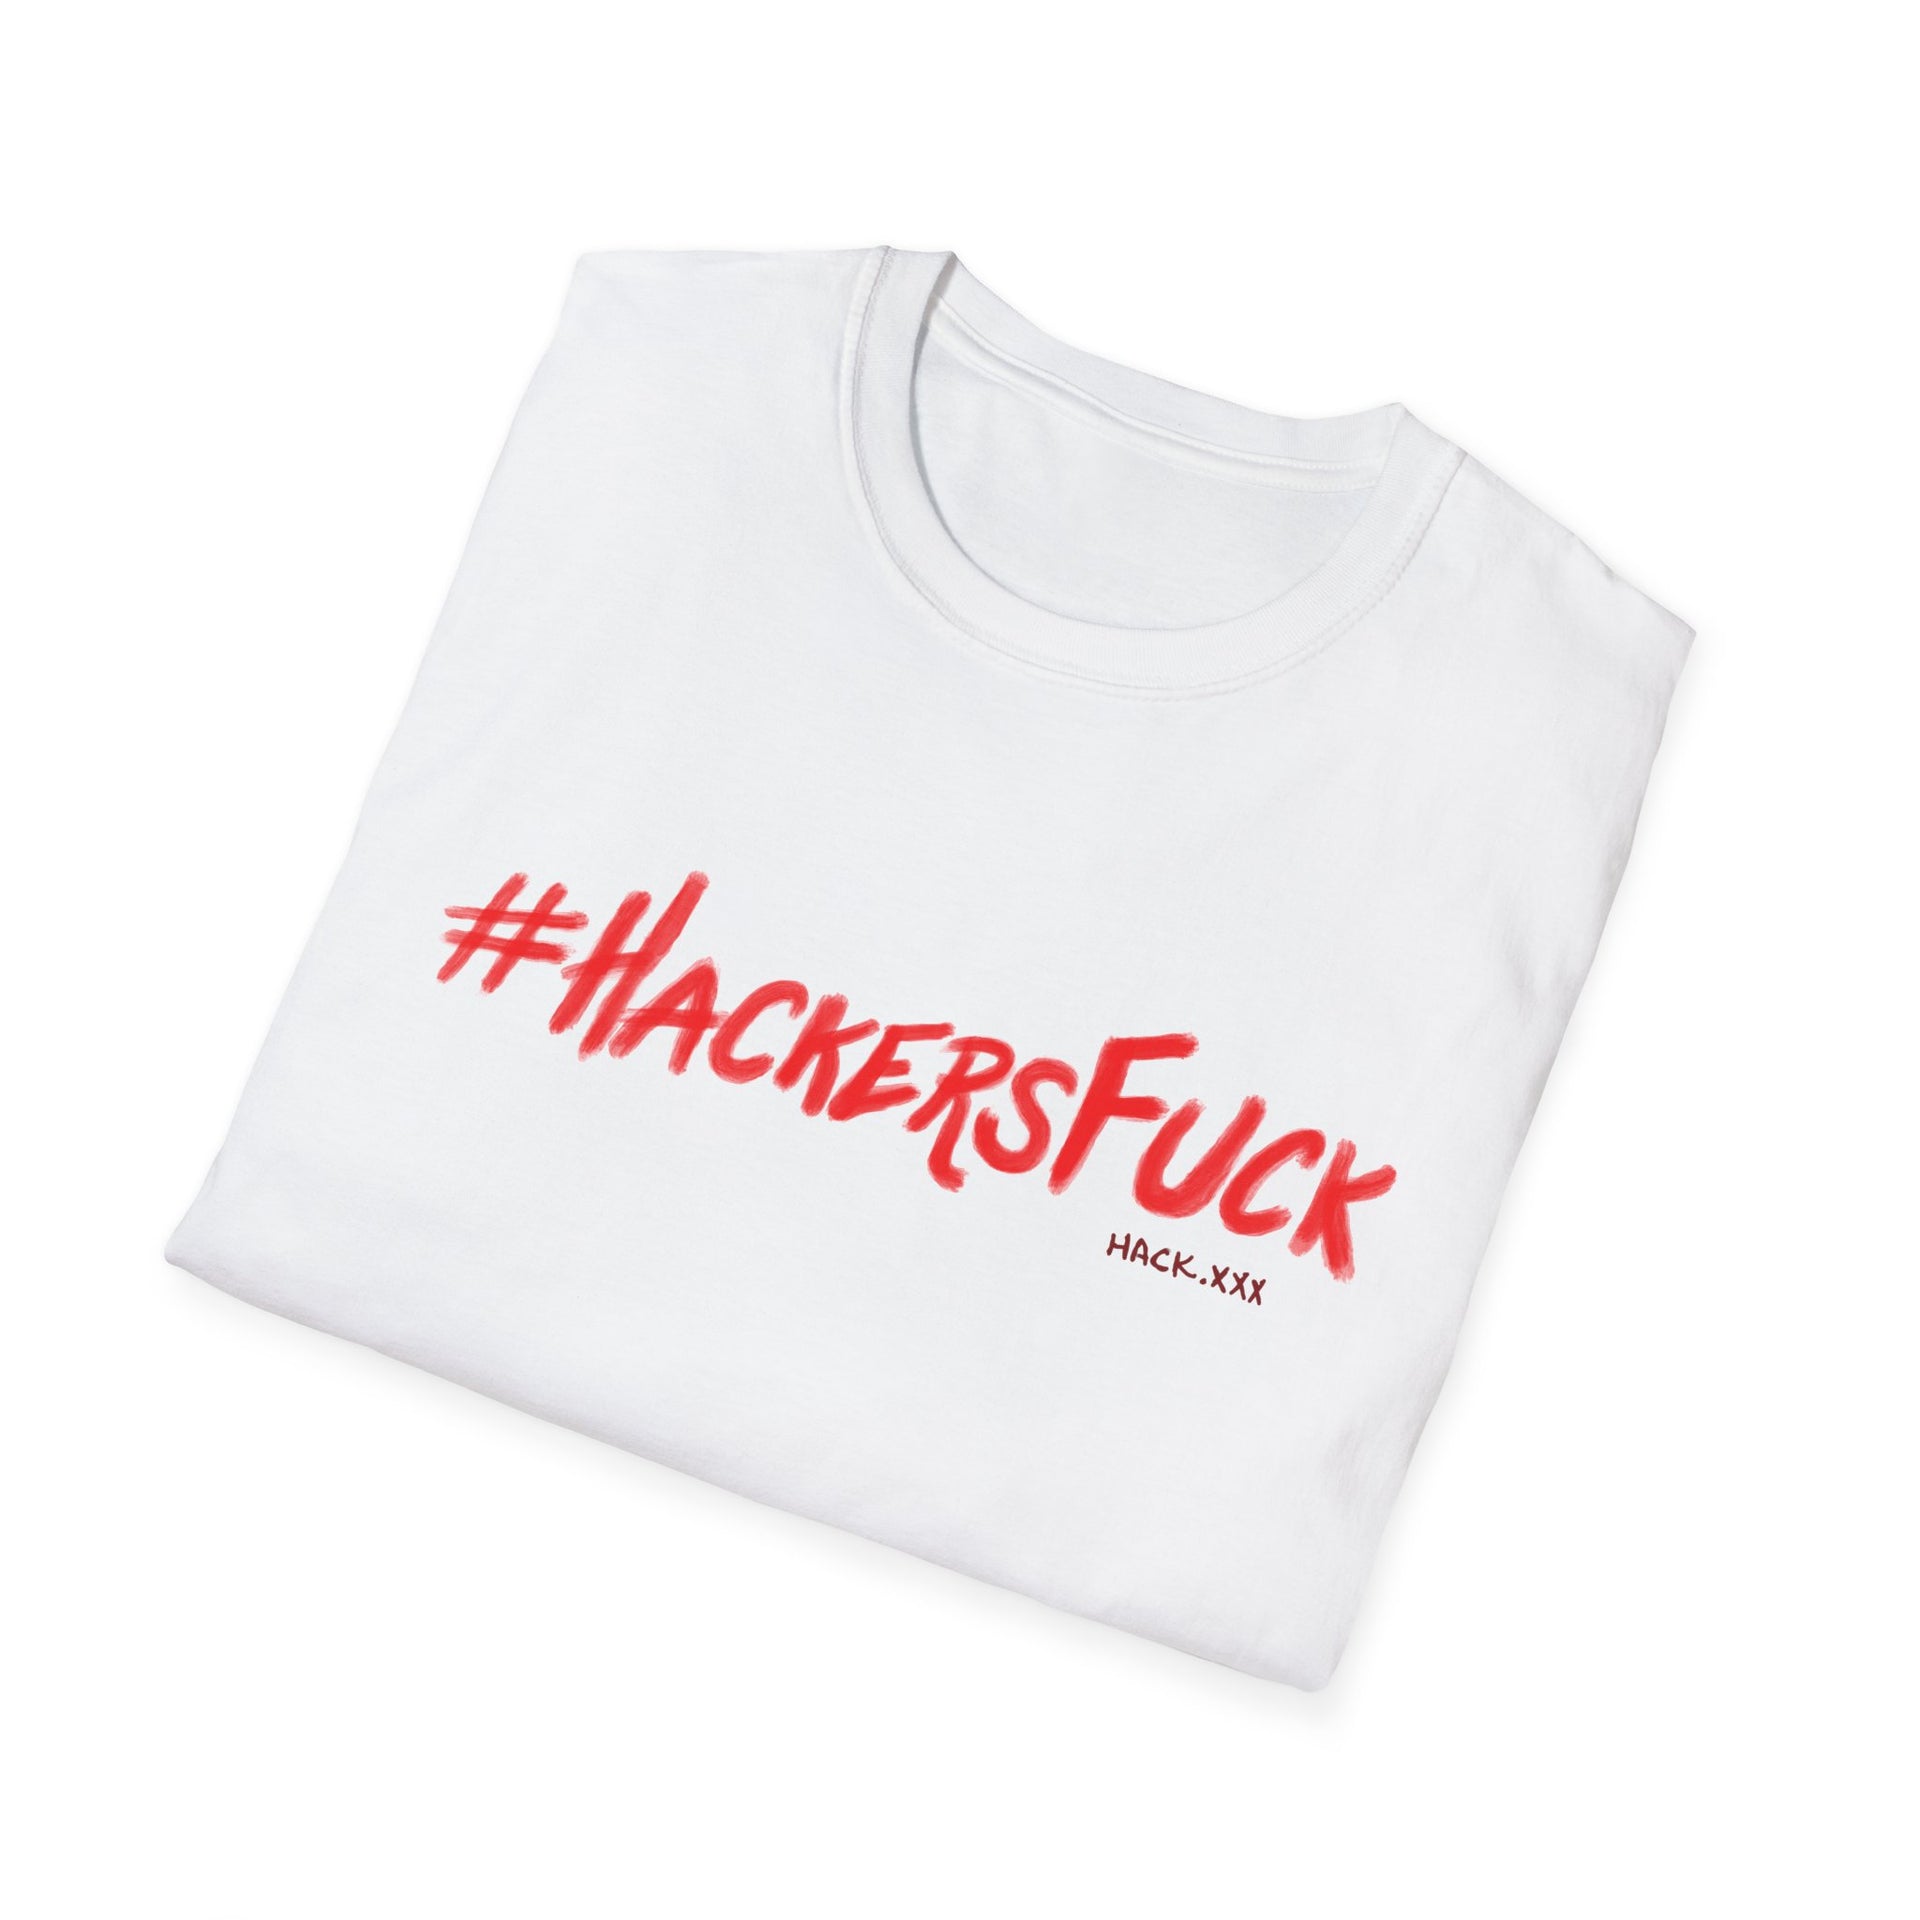 Hashtag hackers suck Unisex Softstyle T-Shirt